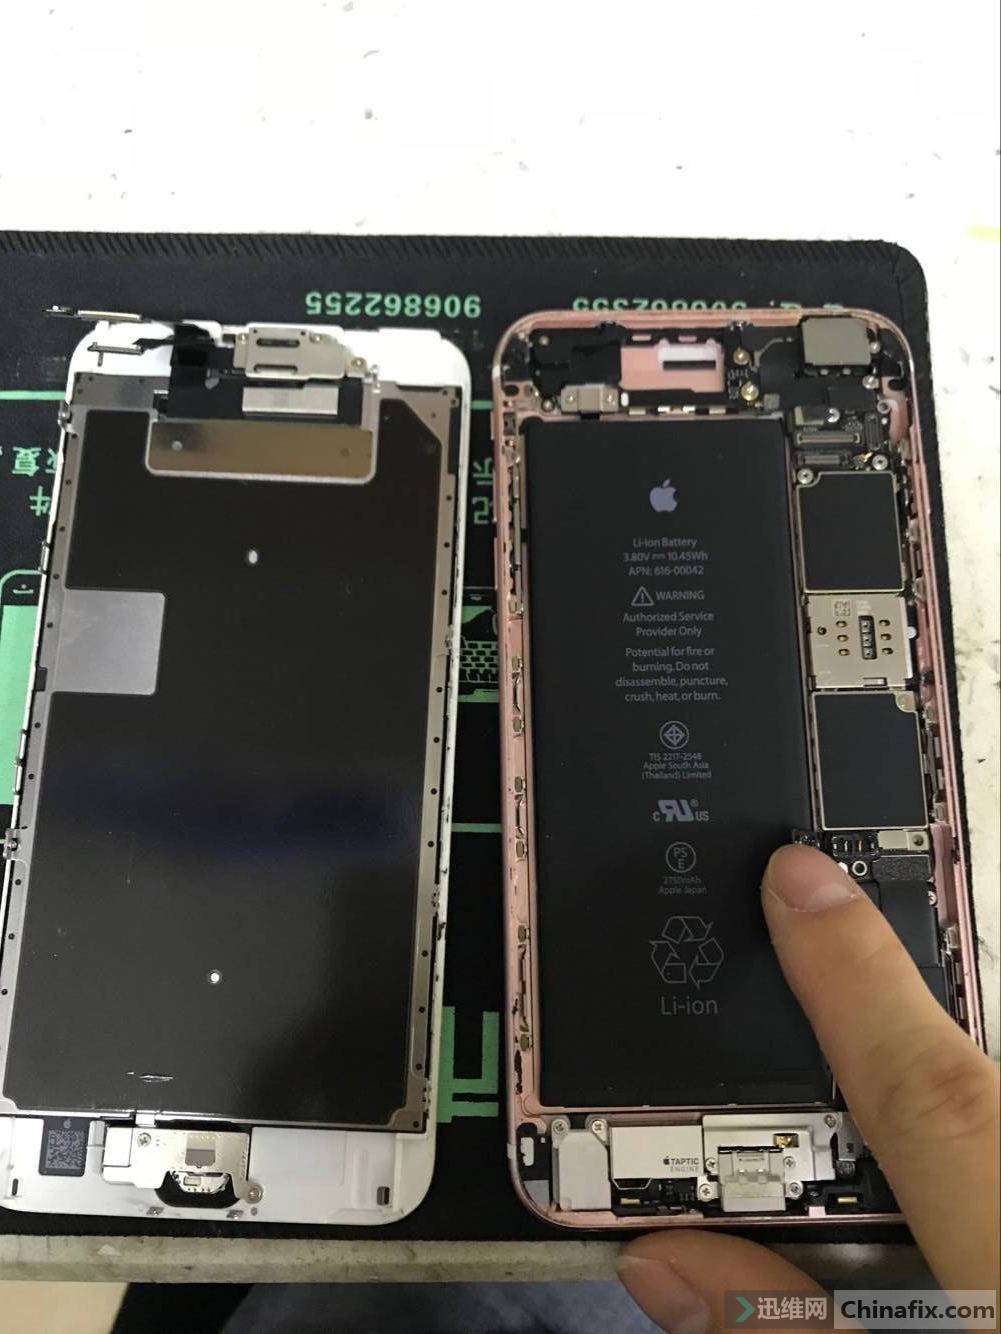 iphone6sp拆机内部图解图片